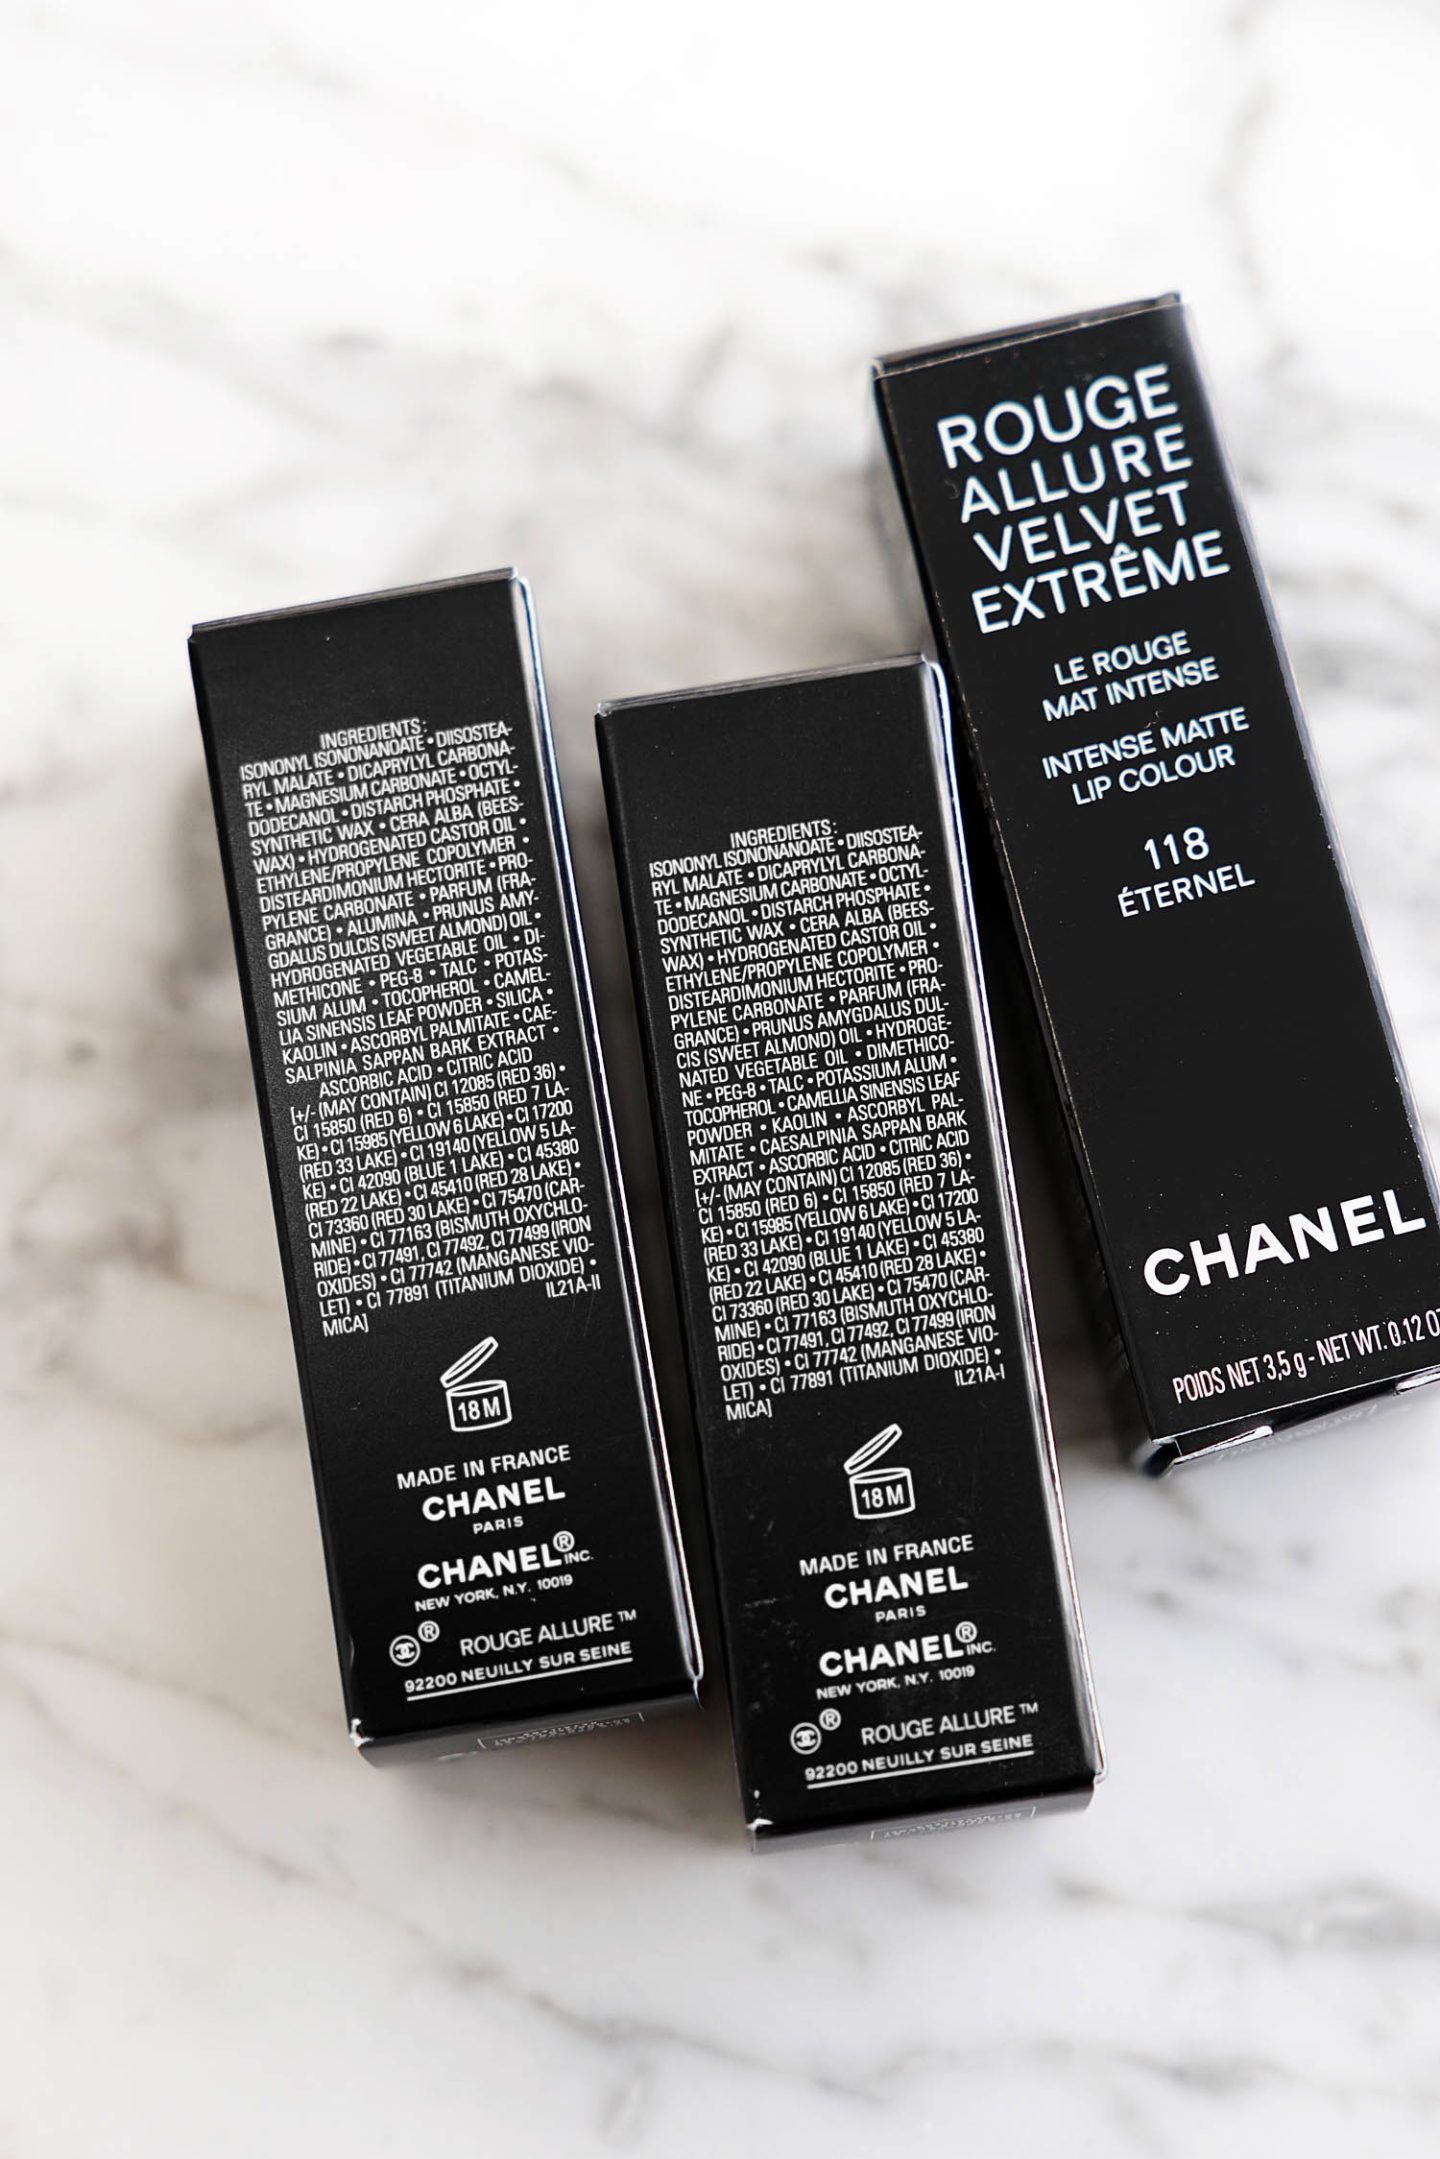 Chanel Rouge Allure Velvet Extreme ingredients